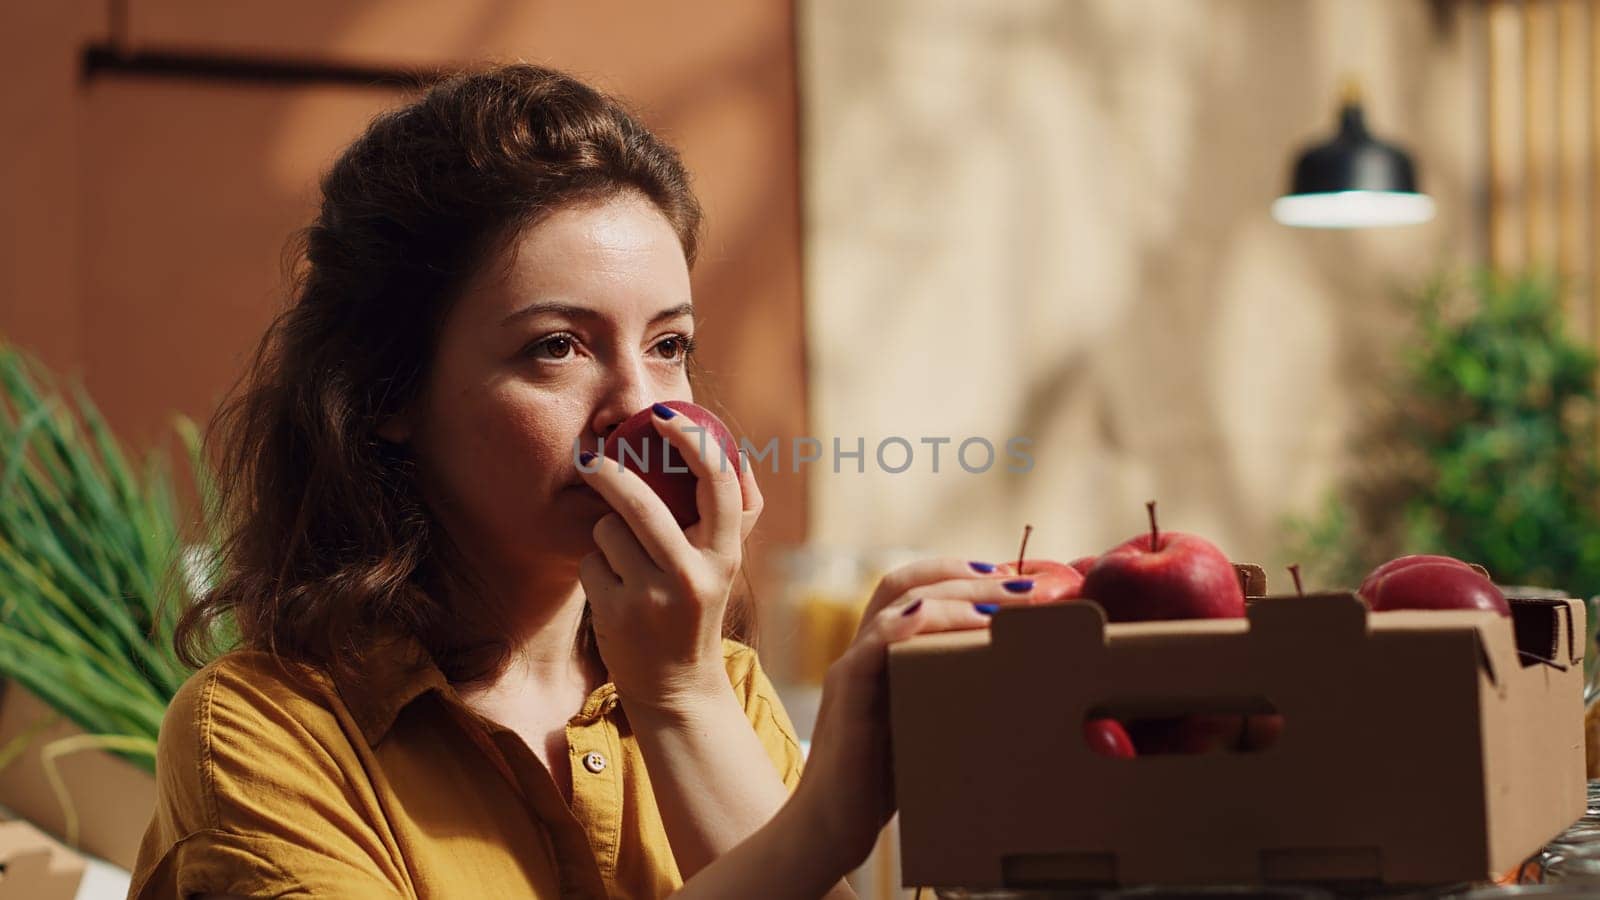 Woman enjoys blissful bio apples smell by DCStudio